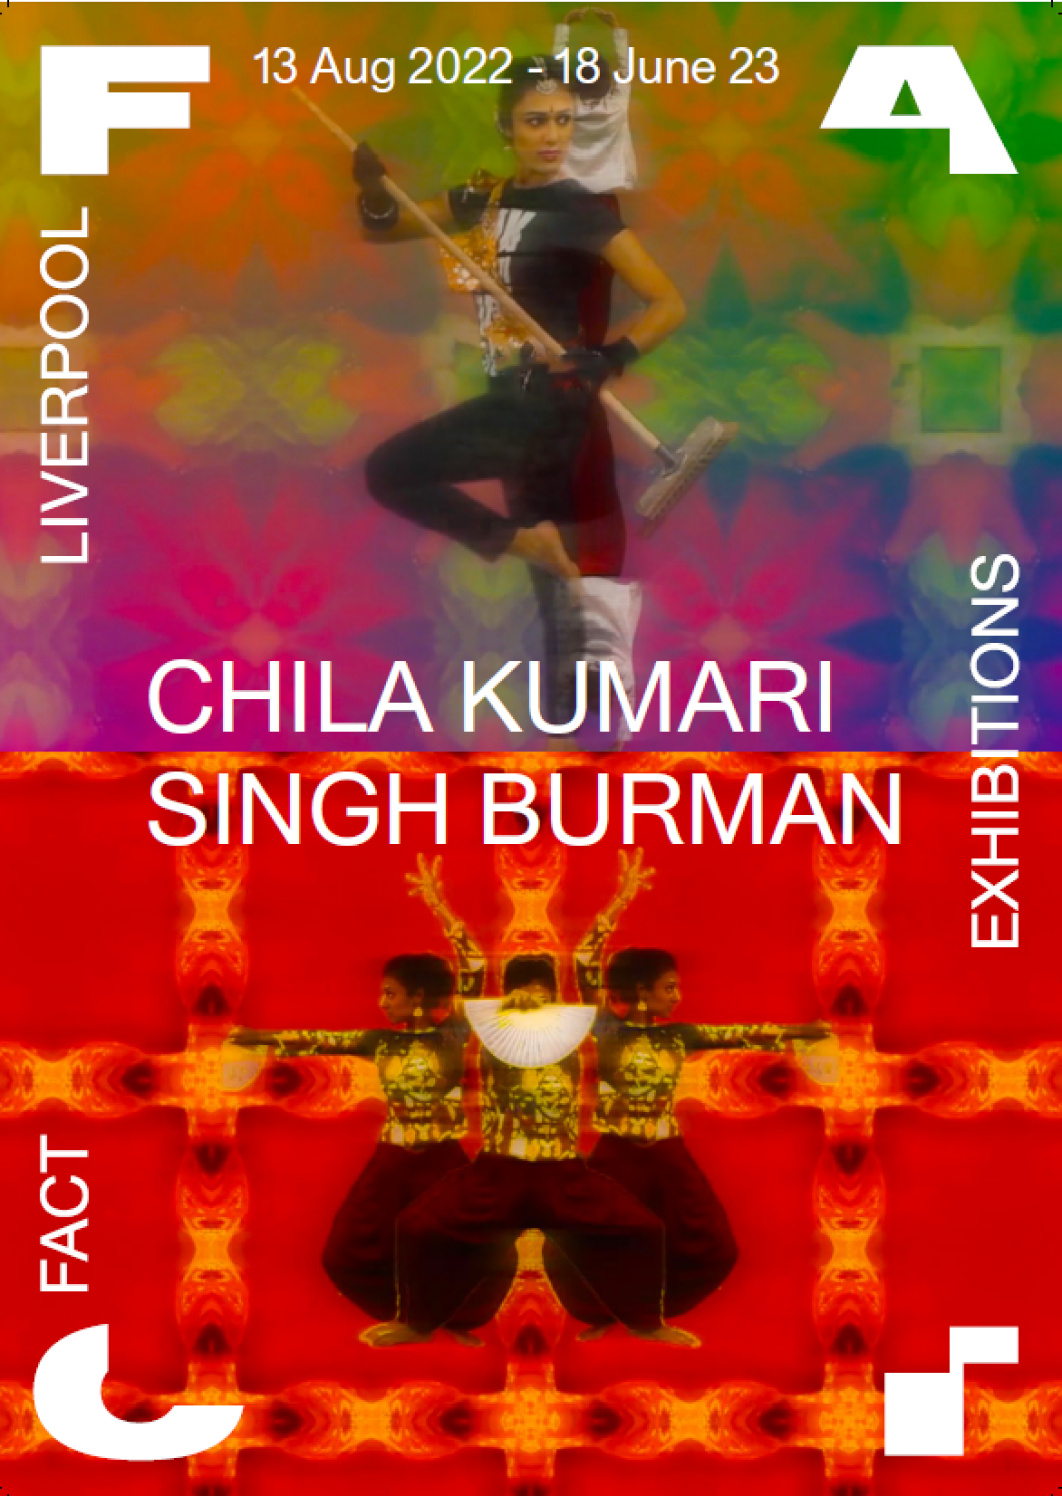 Poster Chila Kumari Singh Burman at FACT Liverpool